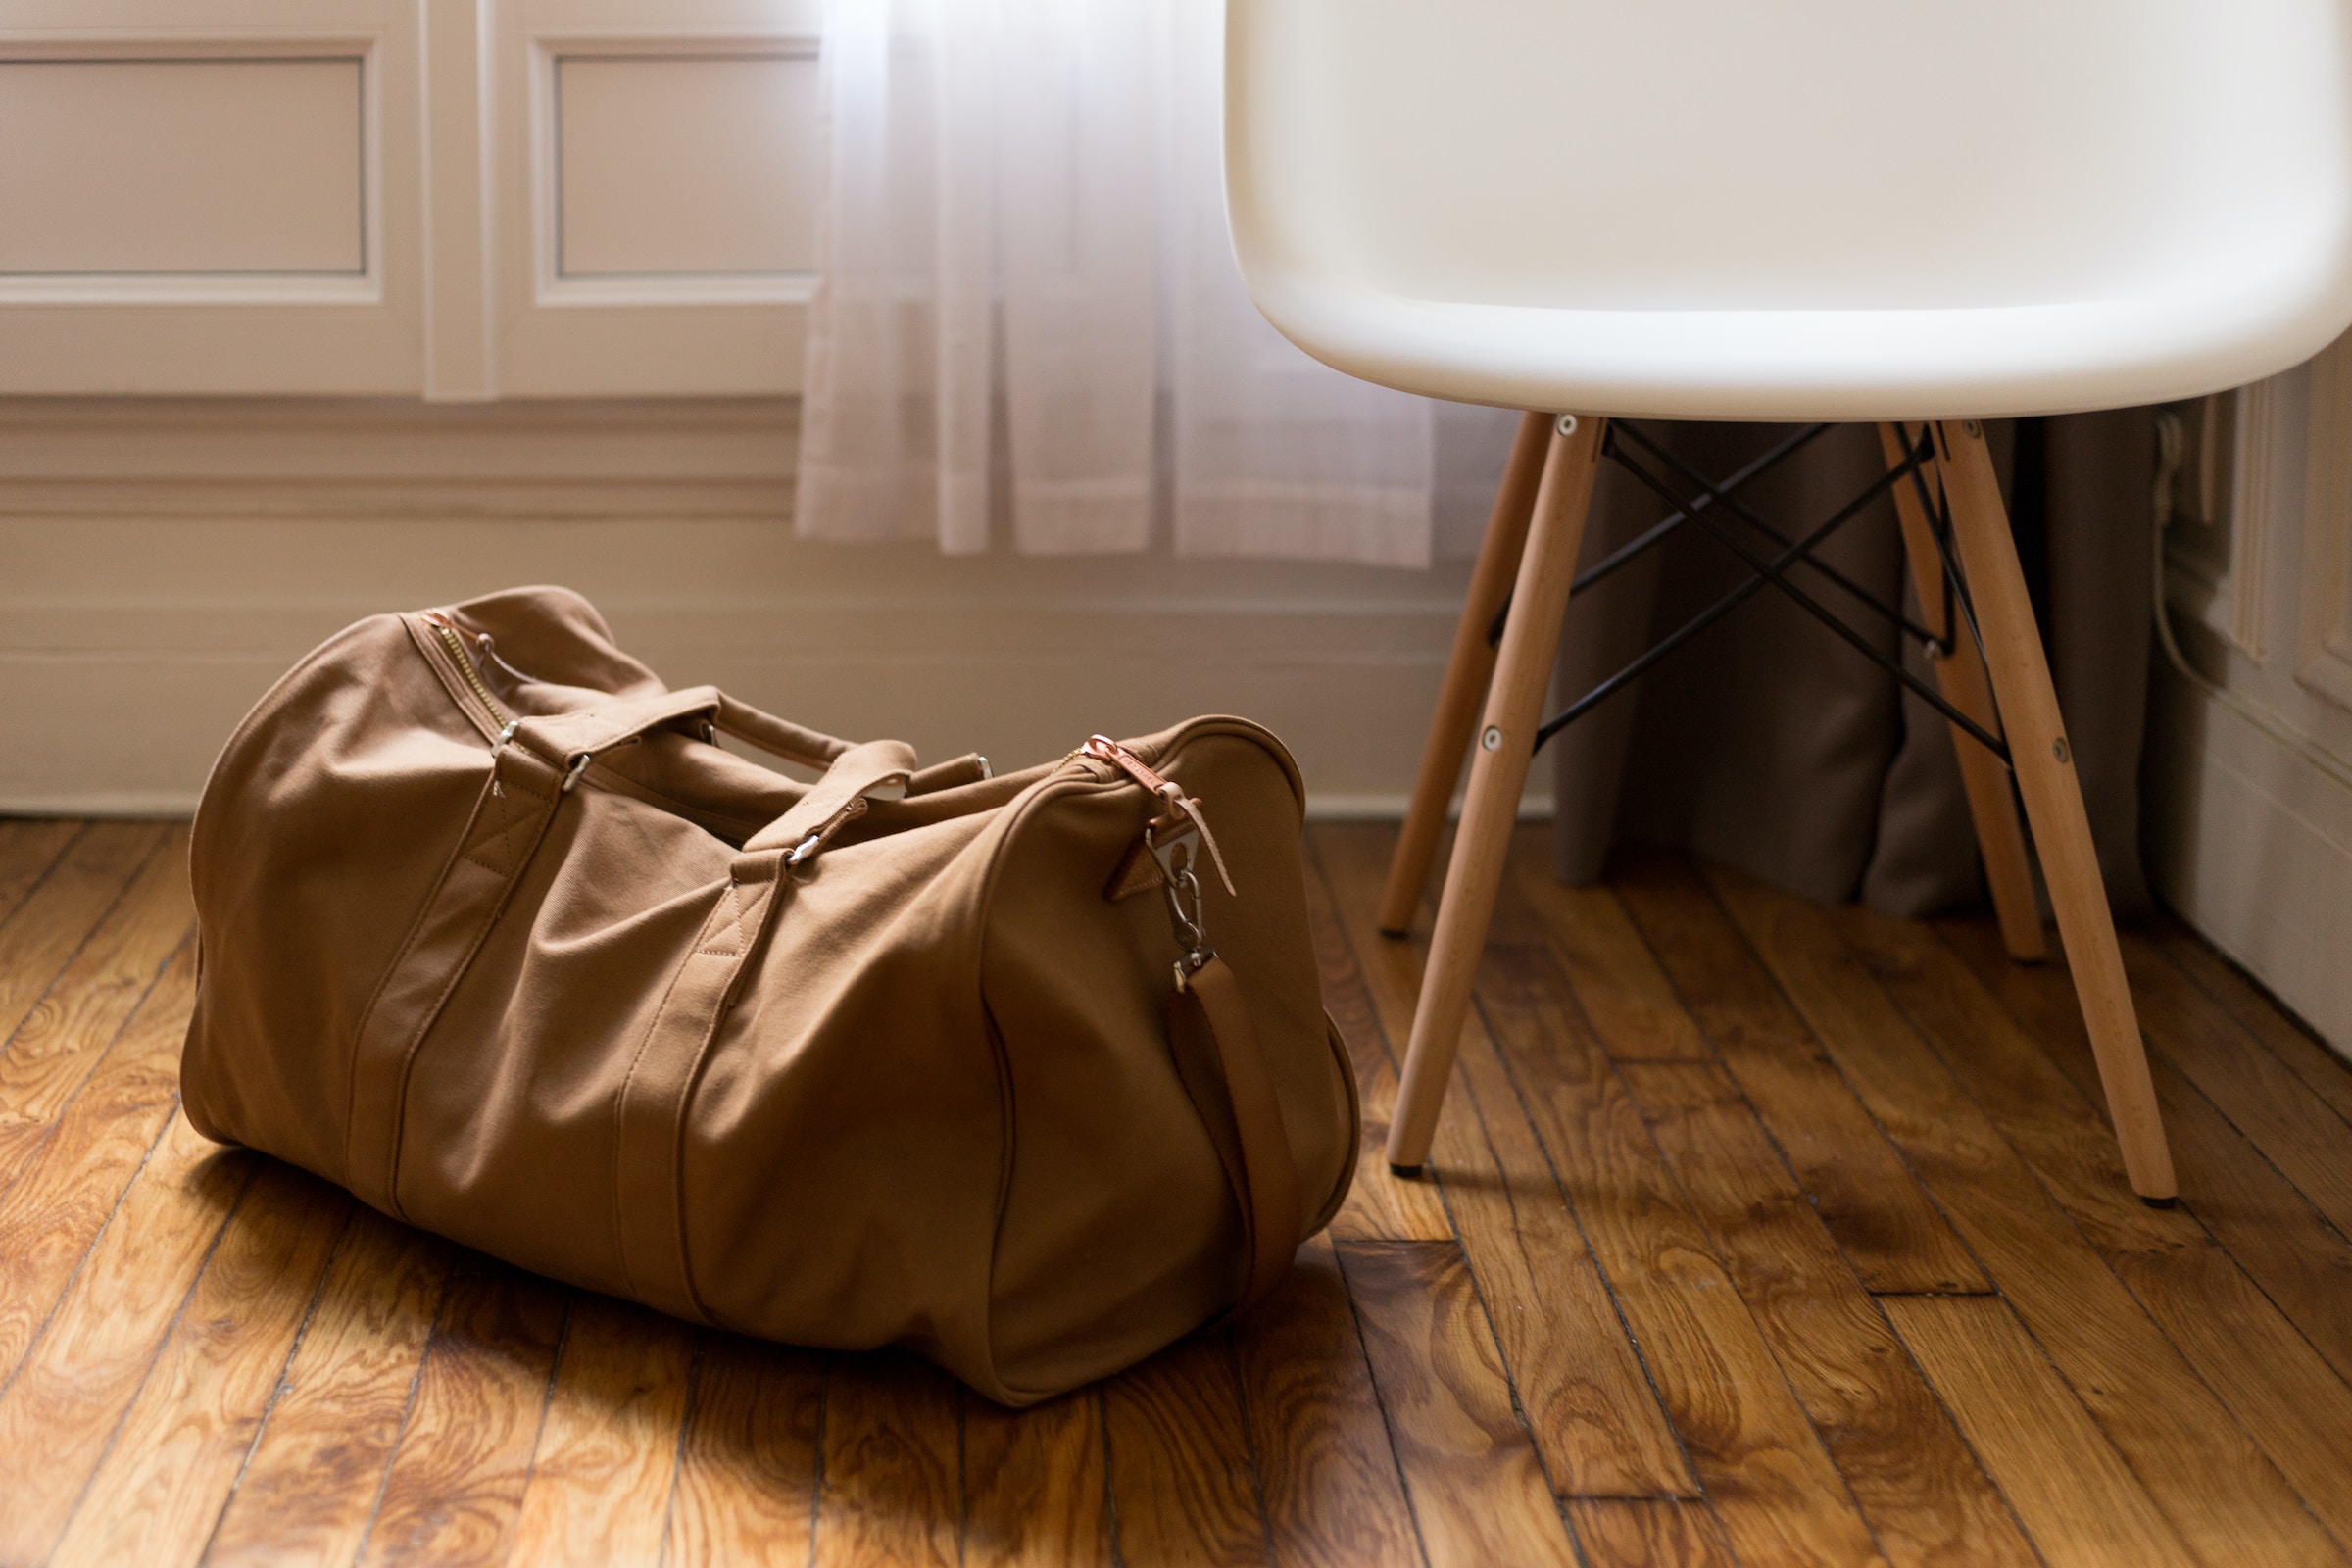 Brown duffel bag | Source: Unsplash